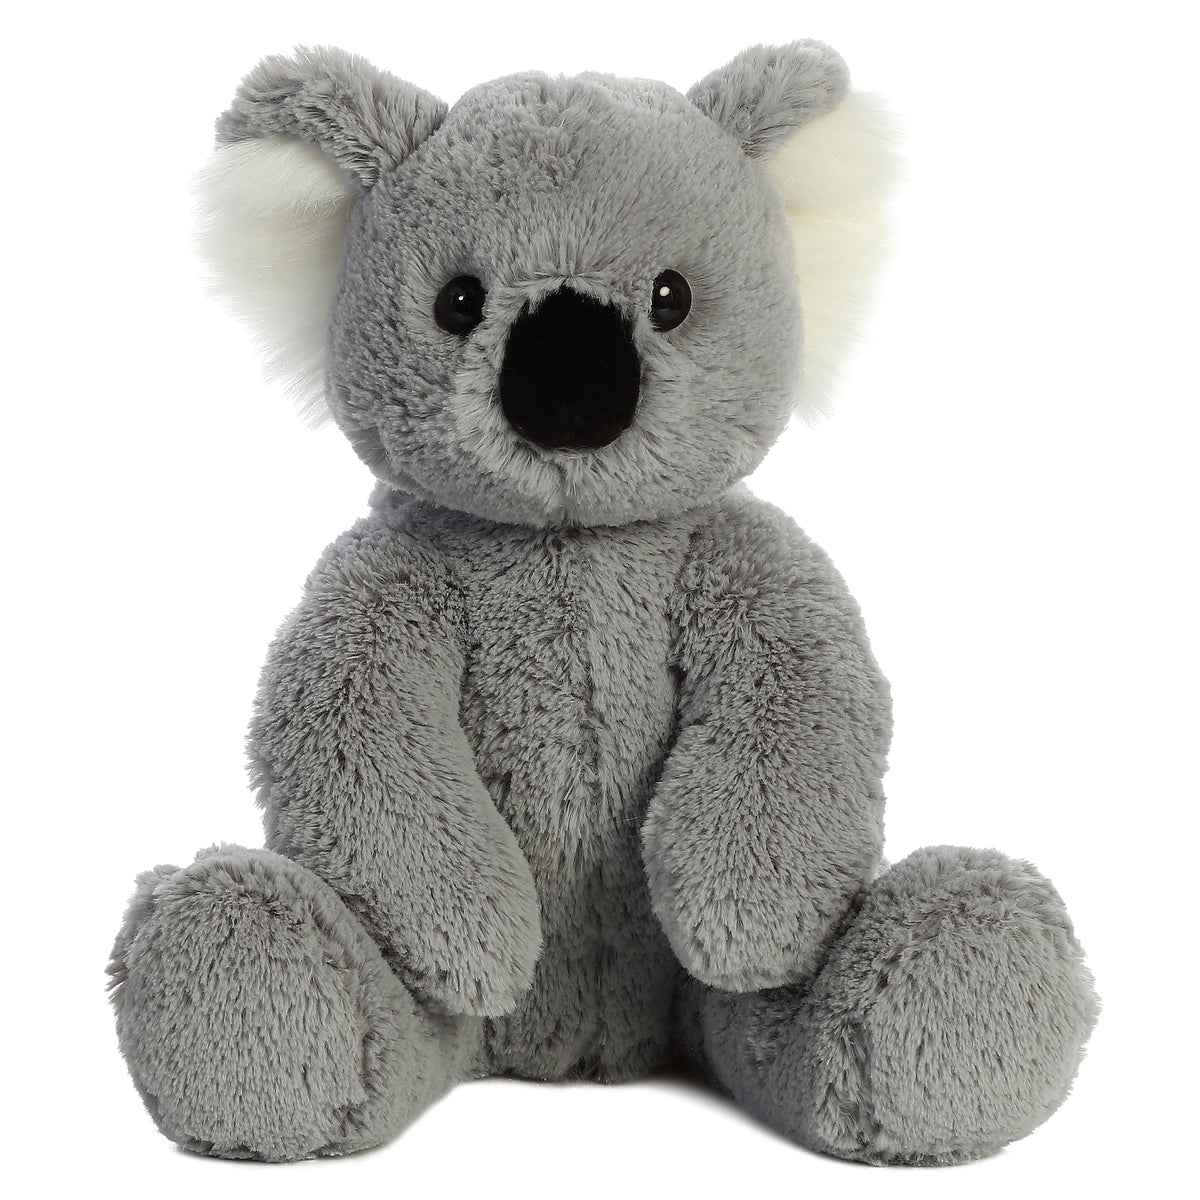 Aurora stuffed animal Koala Plush with grey fur, white ear tufts, and a gentle face!